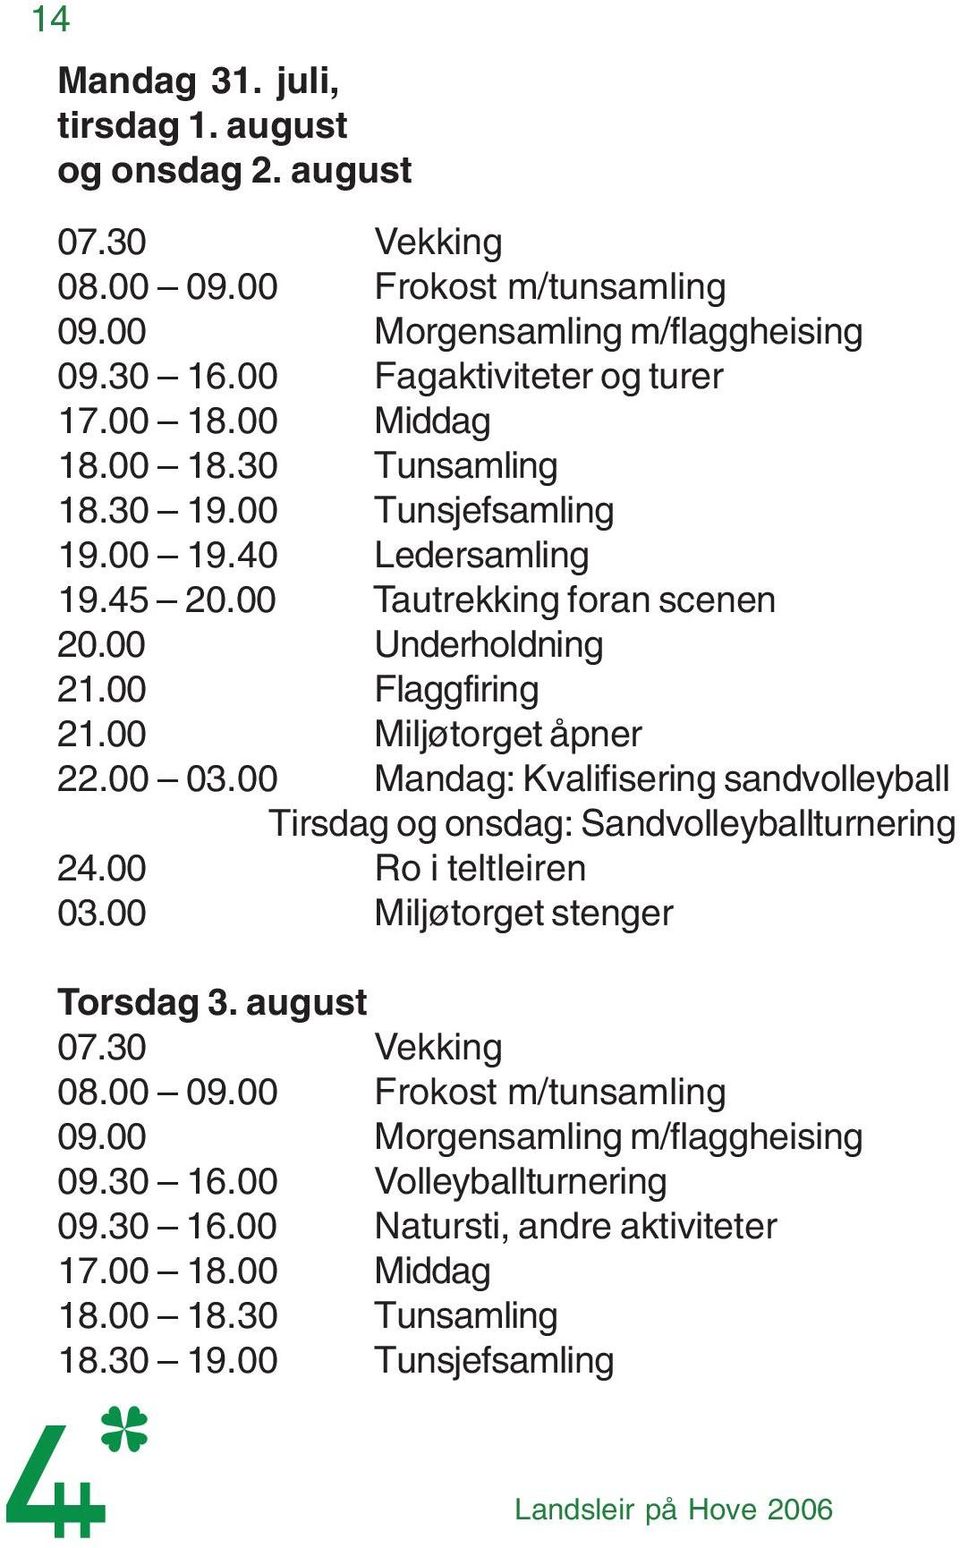 00 03.00 Mandag: Kvalifisering sandvolleyball Tirsdag og onsdag: Sandvolleyballturnering 24.00 Ro i teltleiren 03.00 Miljøtorget stenger Torsdag 3. august 07.30 Vekking 08.00 09.